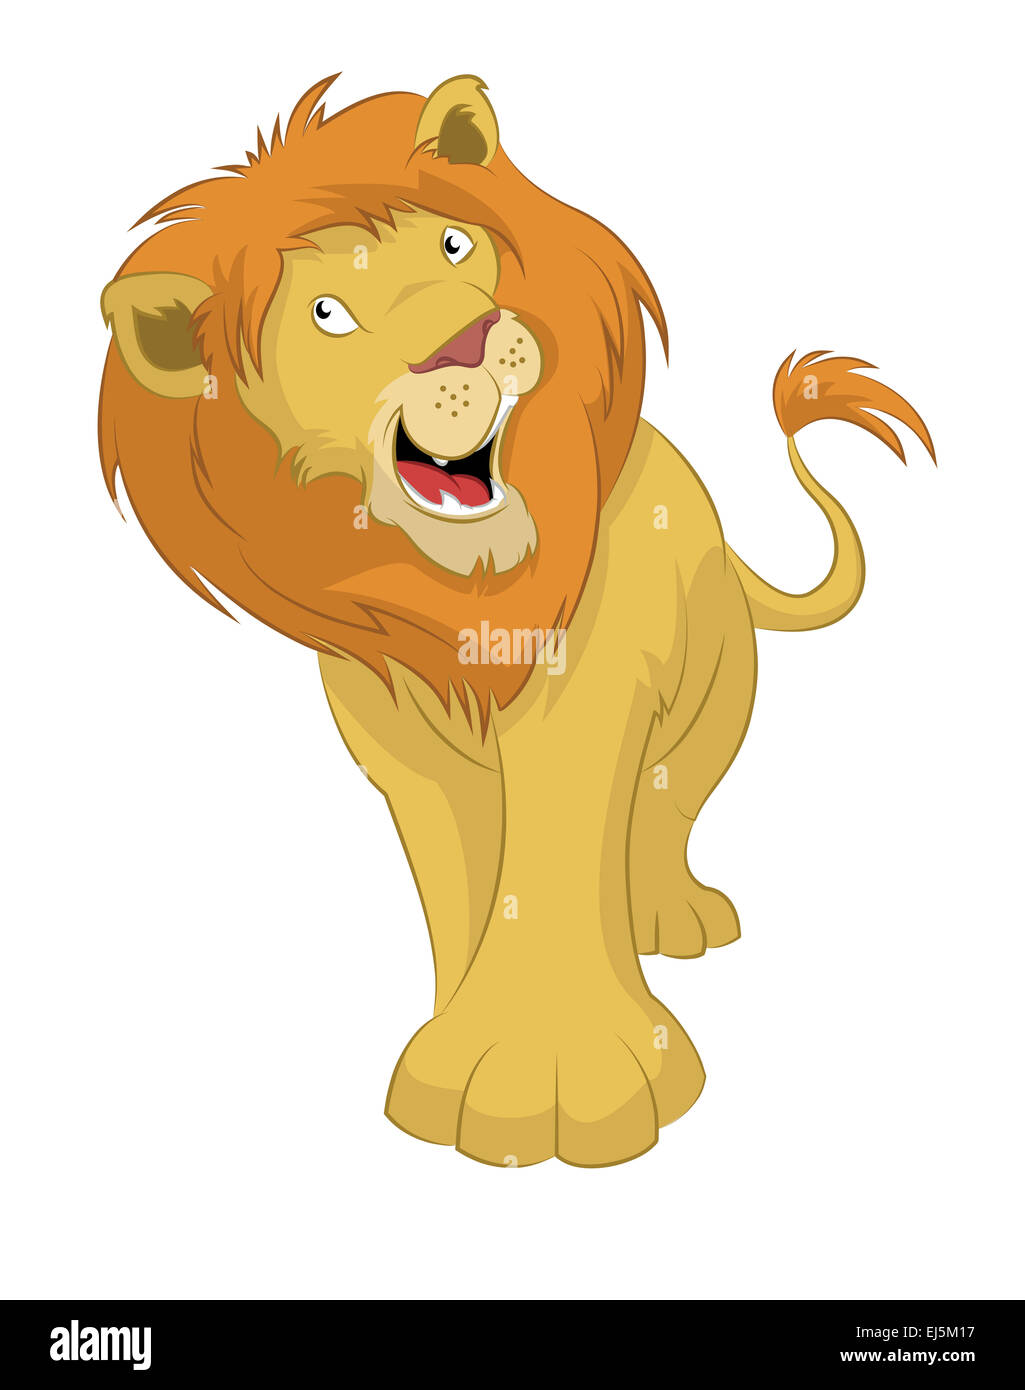 Vector image of big funny cartoon lion Stock Photo - Alamy